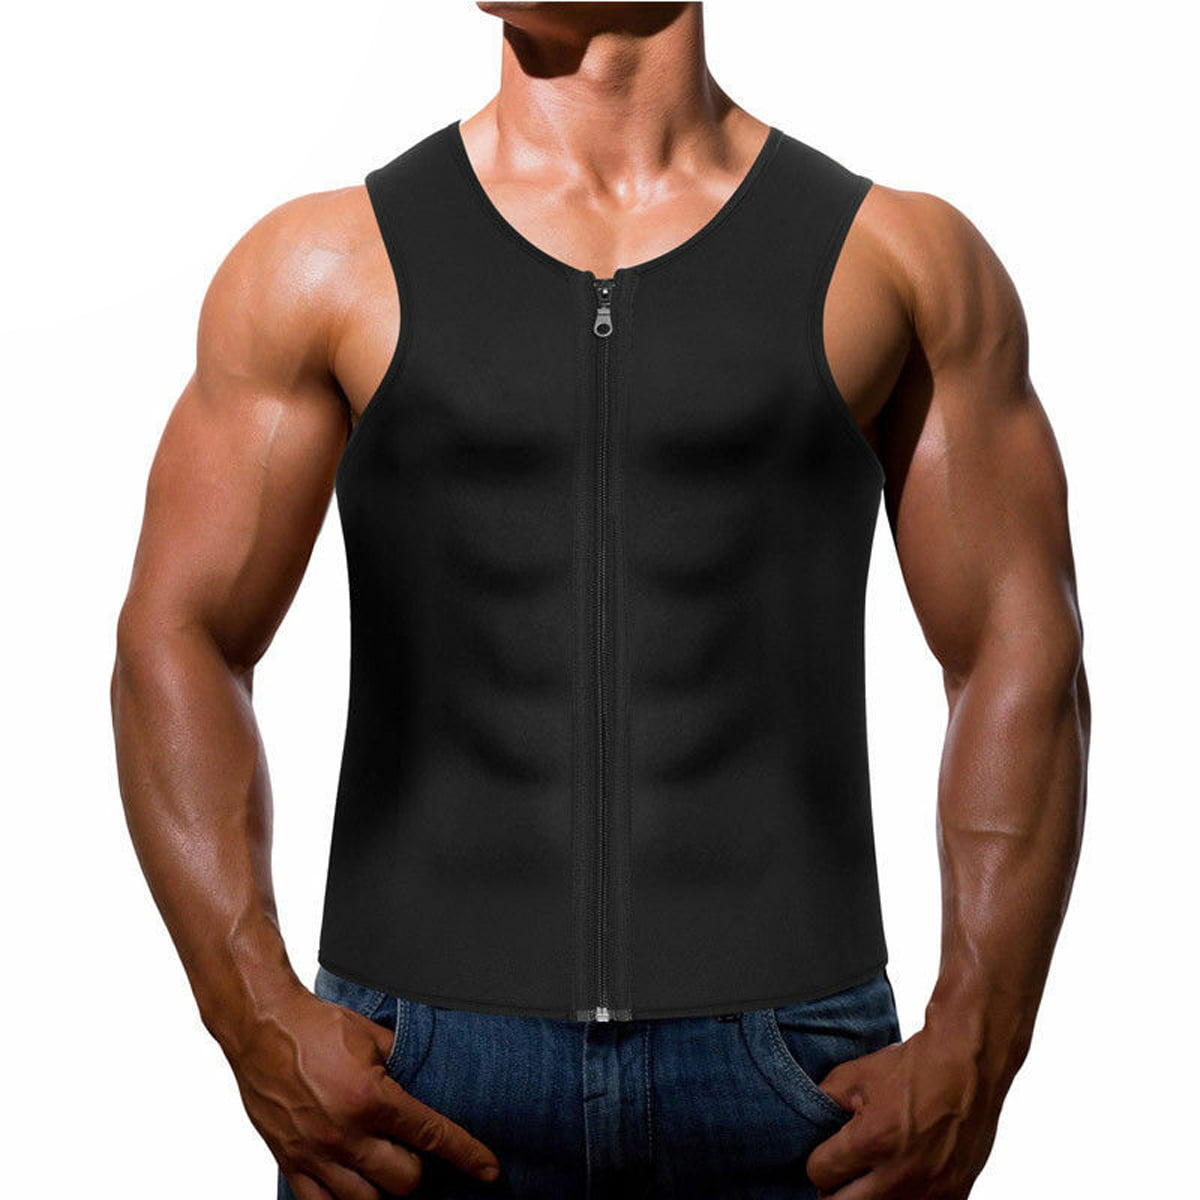 Men's Neoprene Sauna Vest Sweat Shirt Fat Body Shaper Long Sleeves Gym Training 